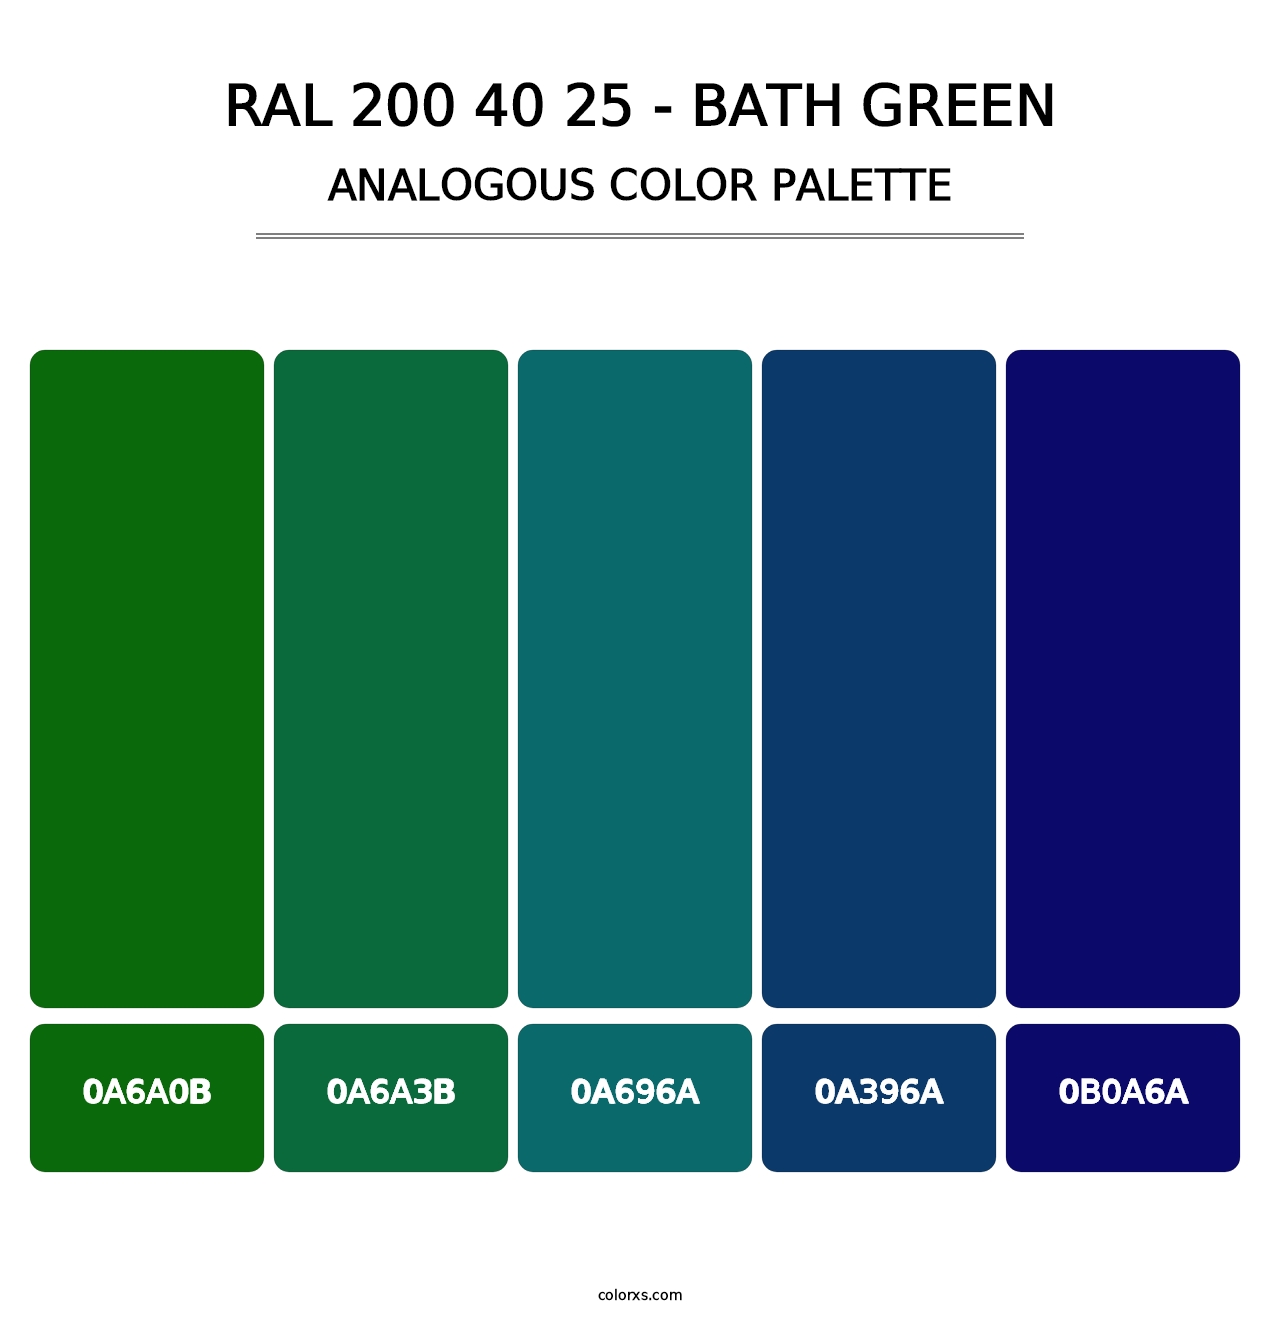 RAL 200 40 25 - Bath Green - Analogous Color Palette